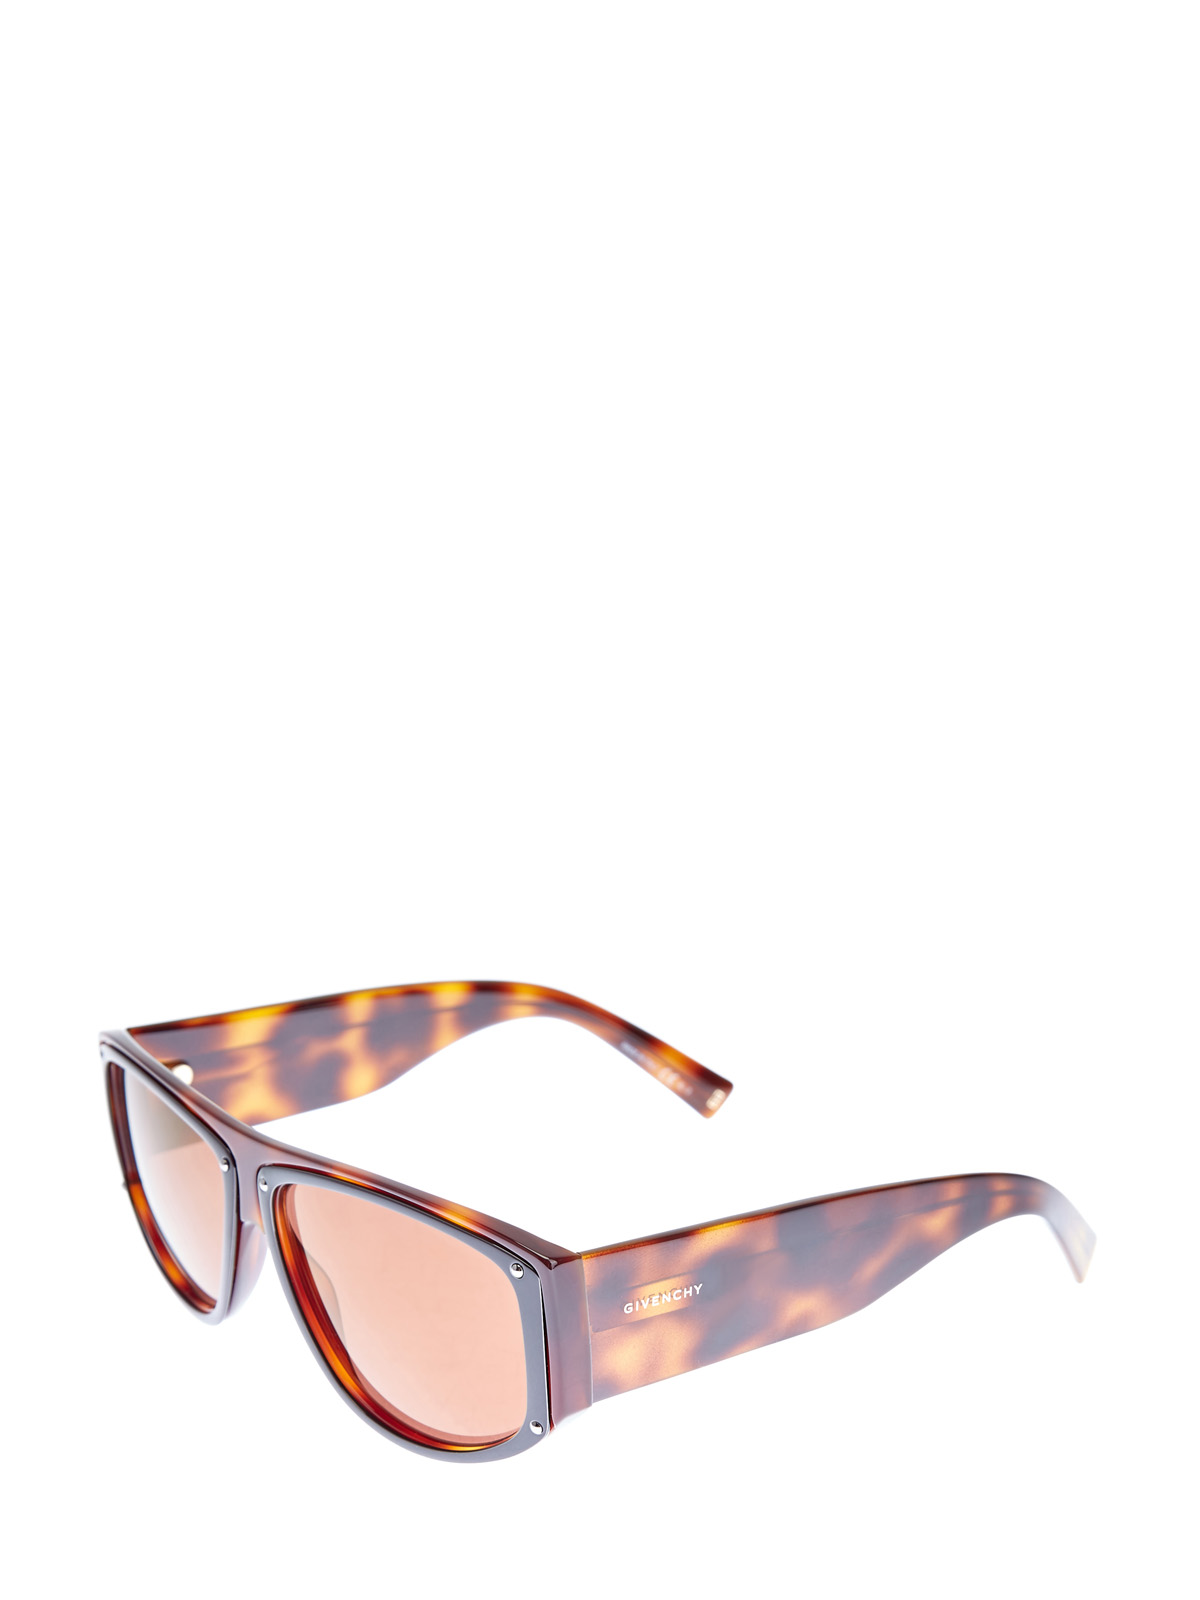 Очки с широкими дужками из легкого черепахового ацетата GIVENCHY (sunglasses), цвет коричневый, размер S;M;L - фото 2